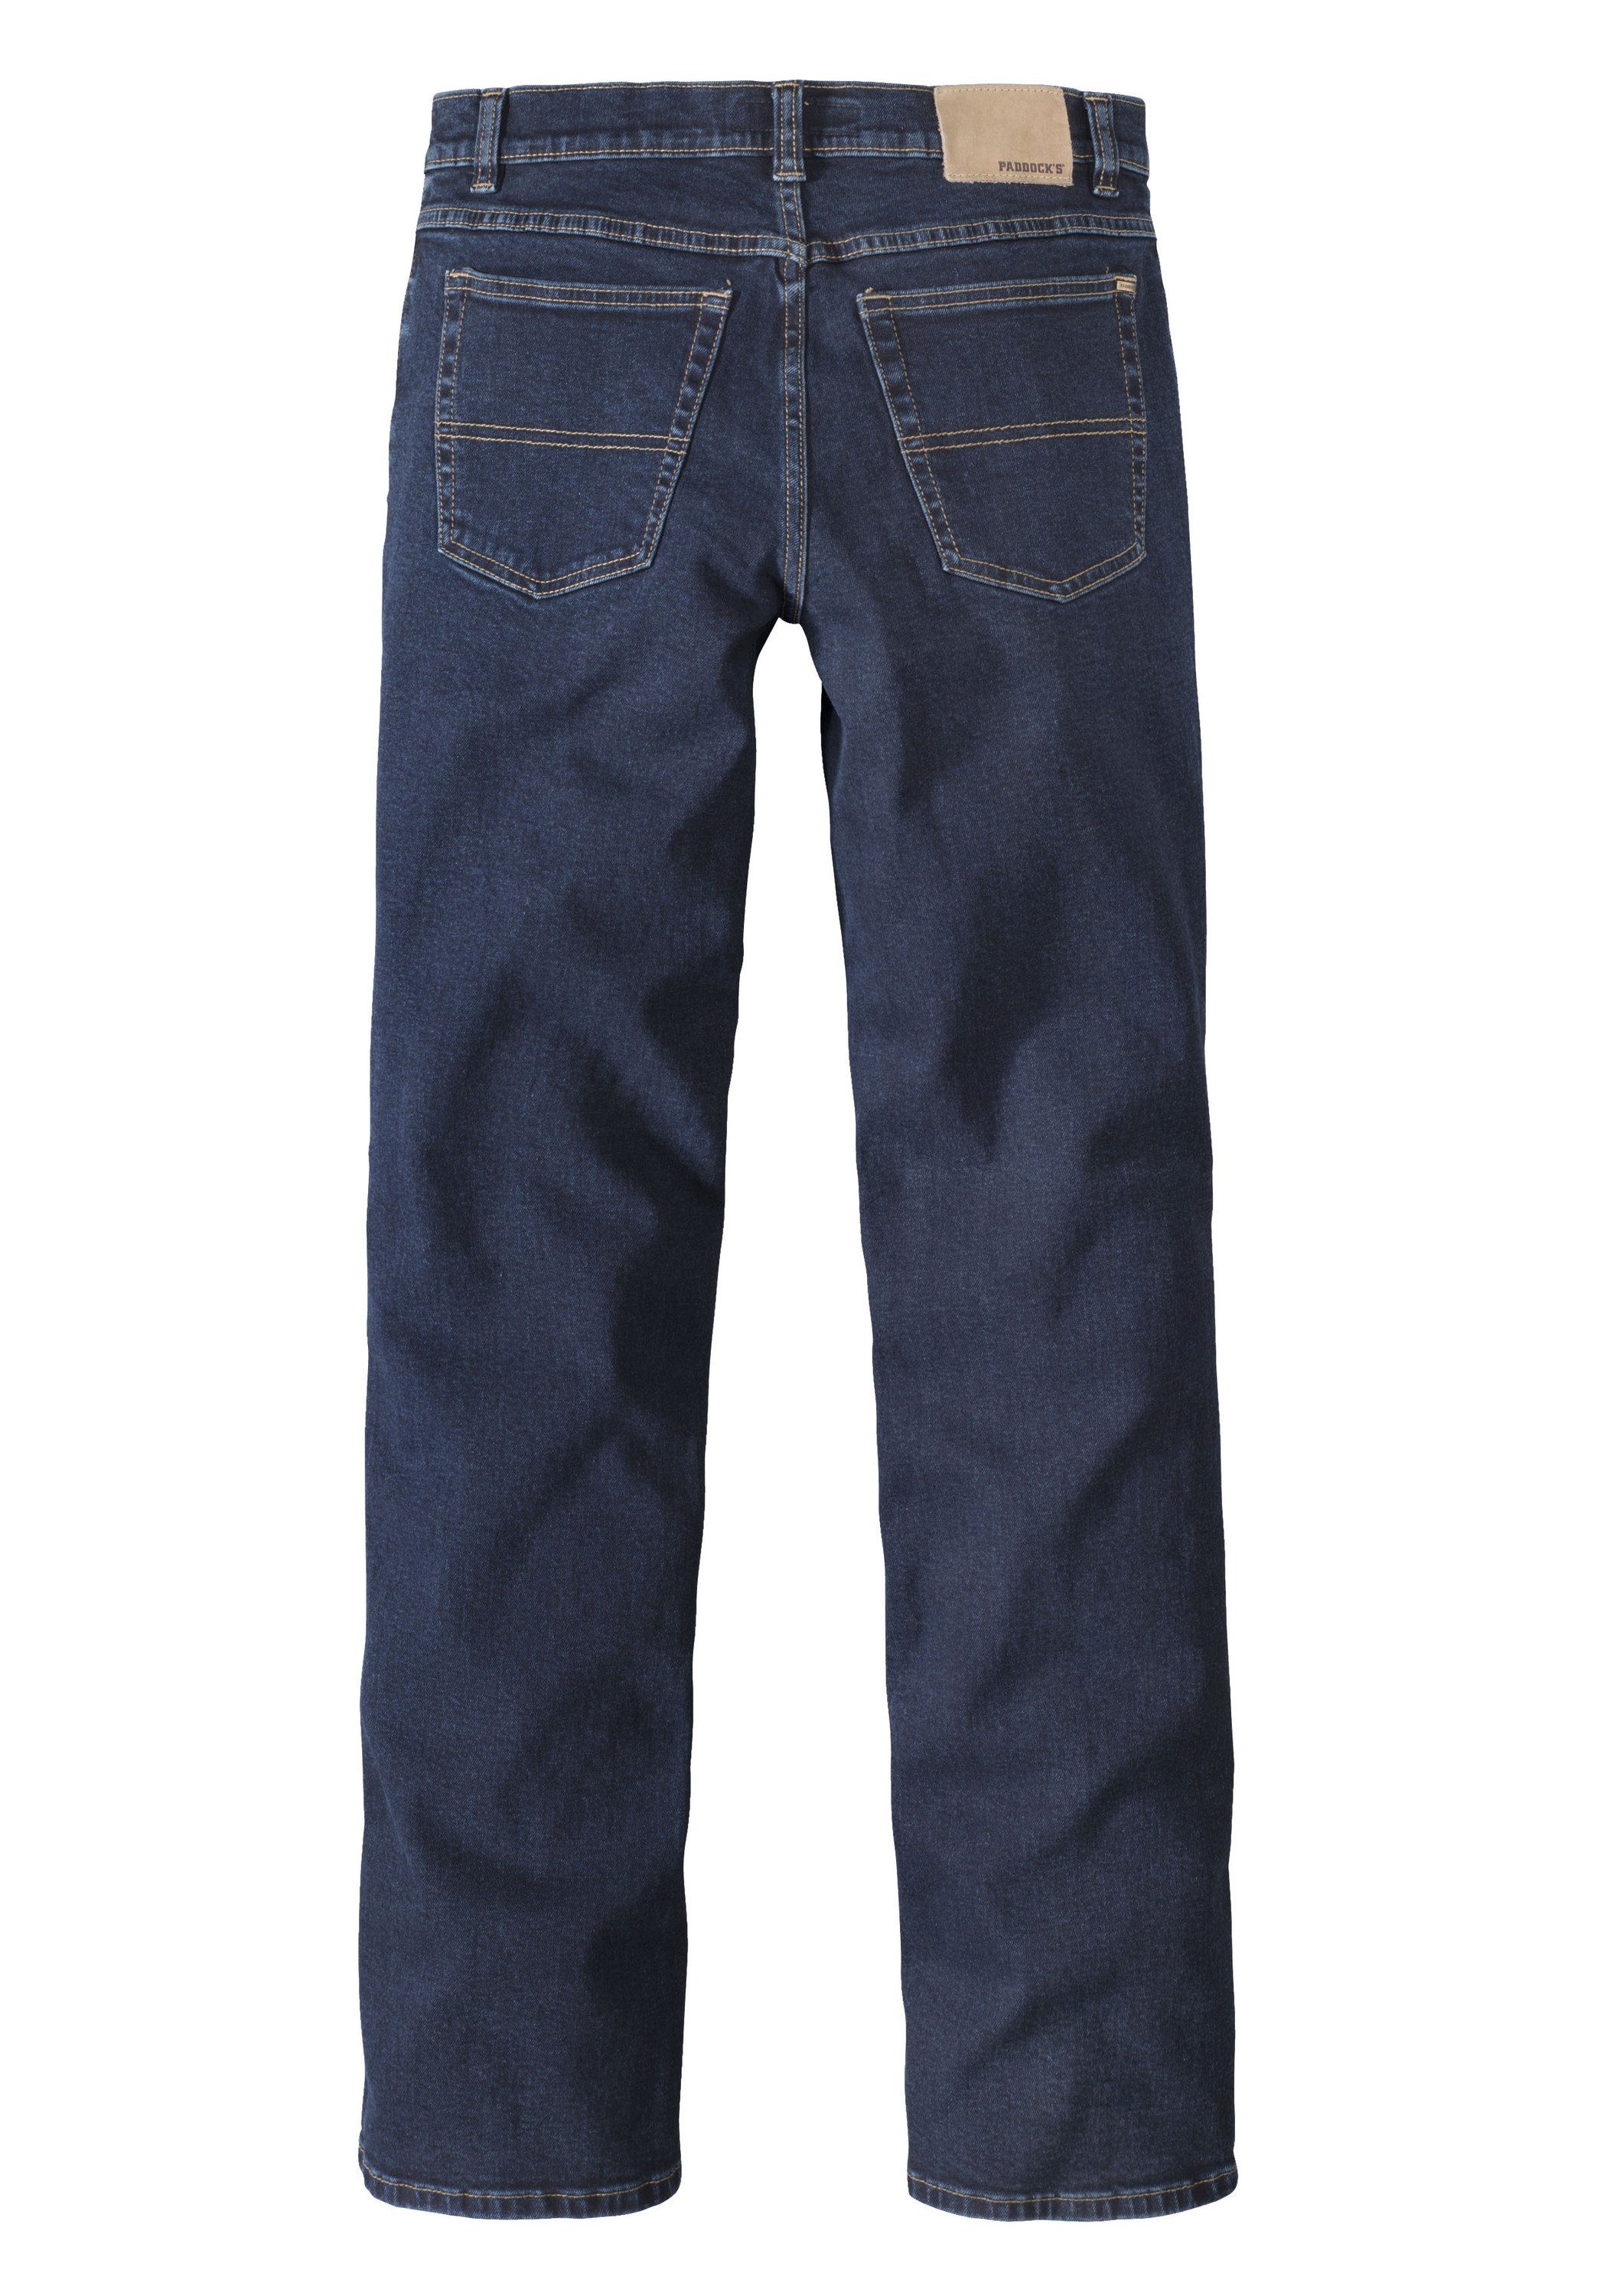 Slim-Fit blue/black Jeans Paddock's mit Slim-fit-Jeans RANGER Stretchanteil